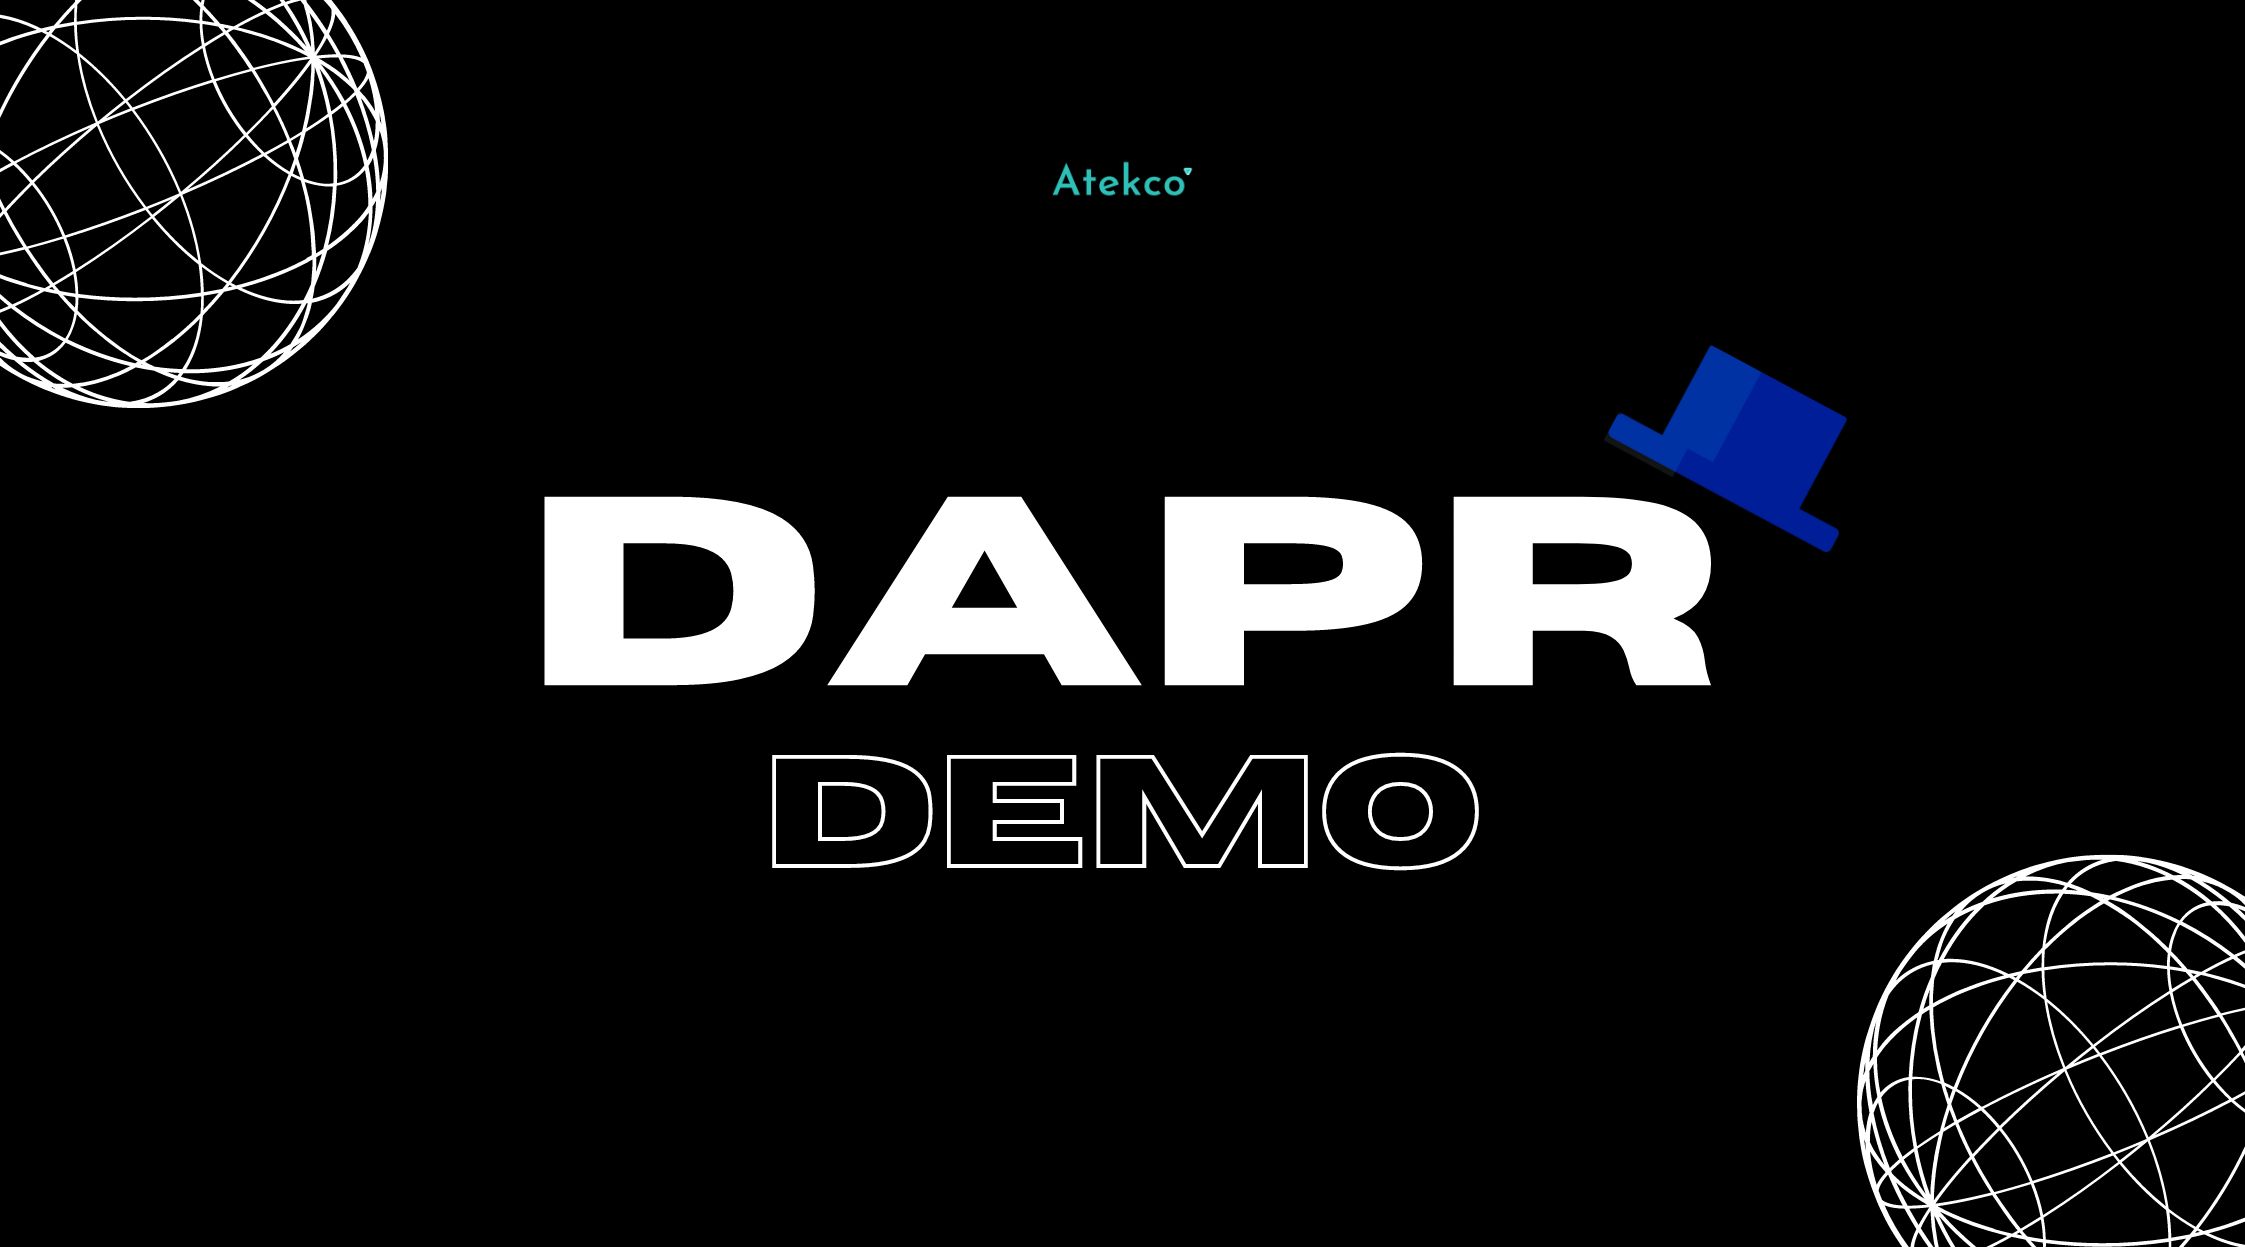 Dapr Demo poster